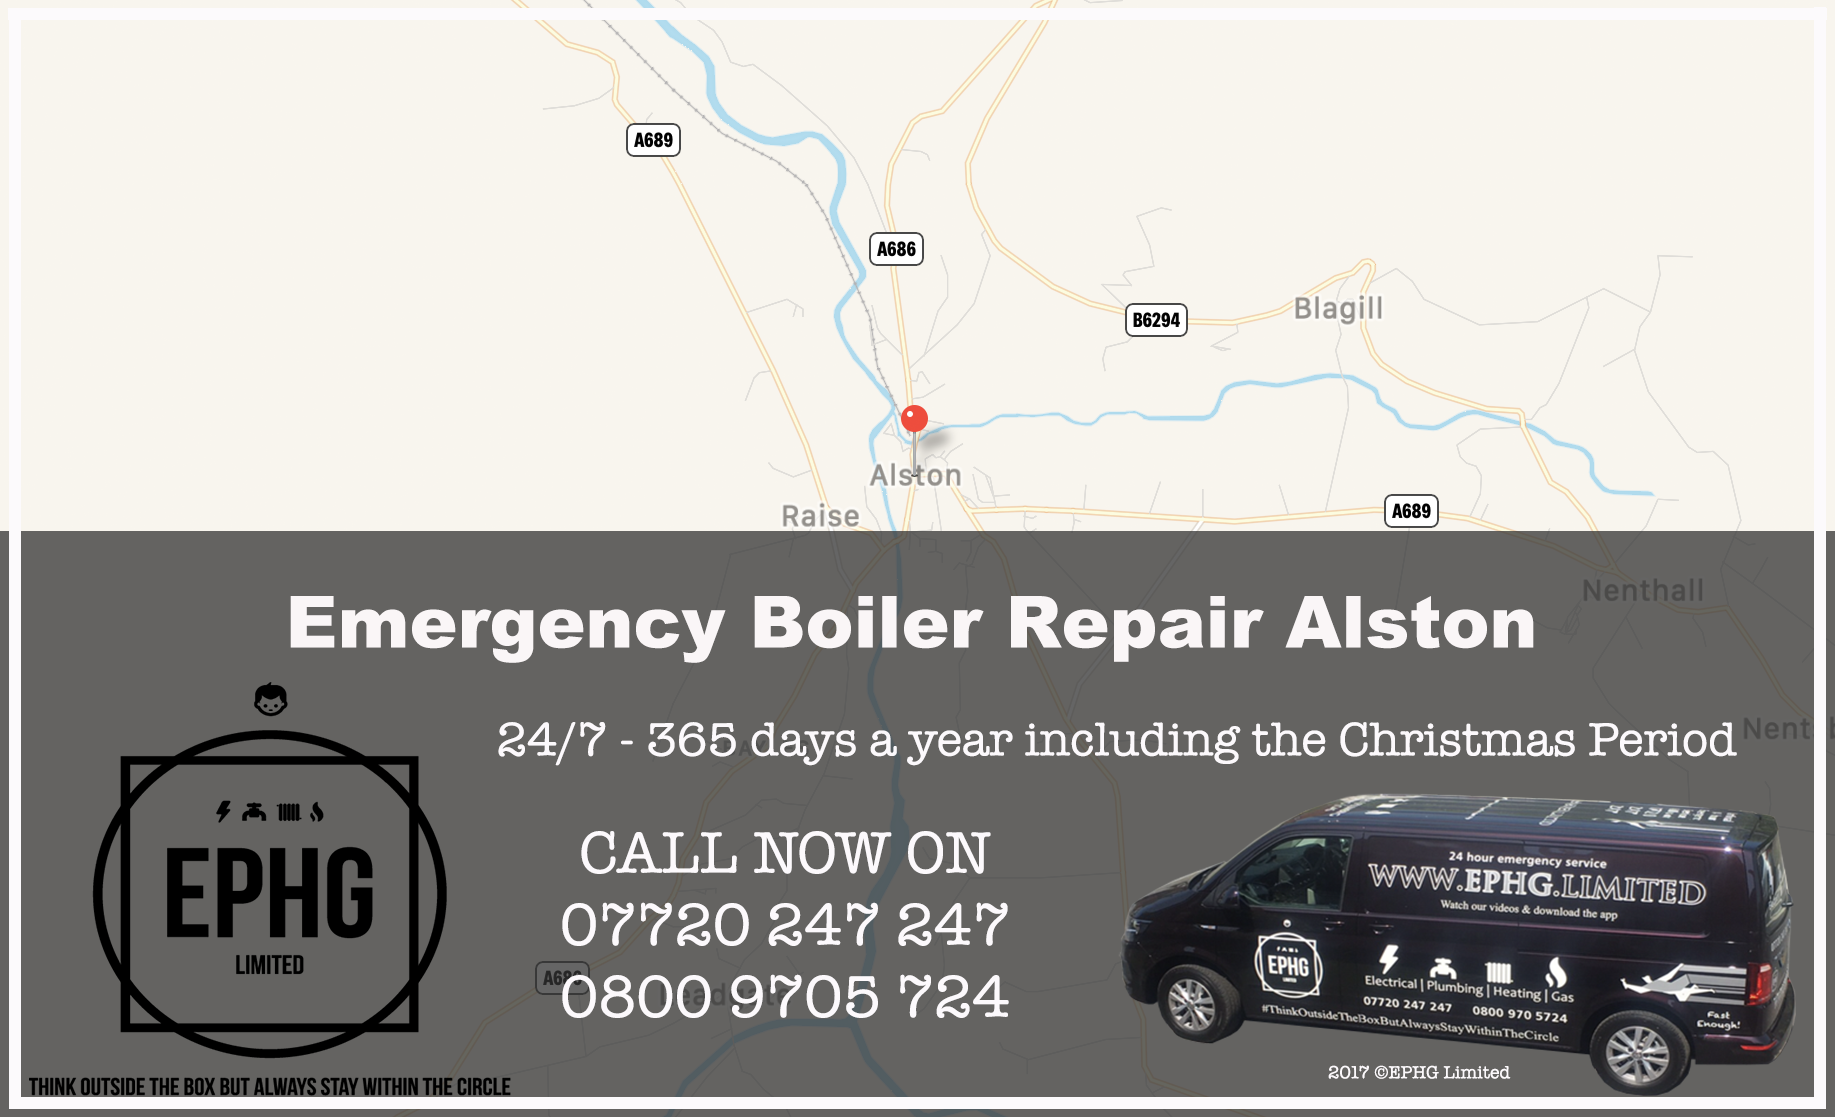 24 Hour Emergency Boiler Repair Alston